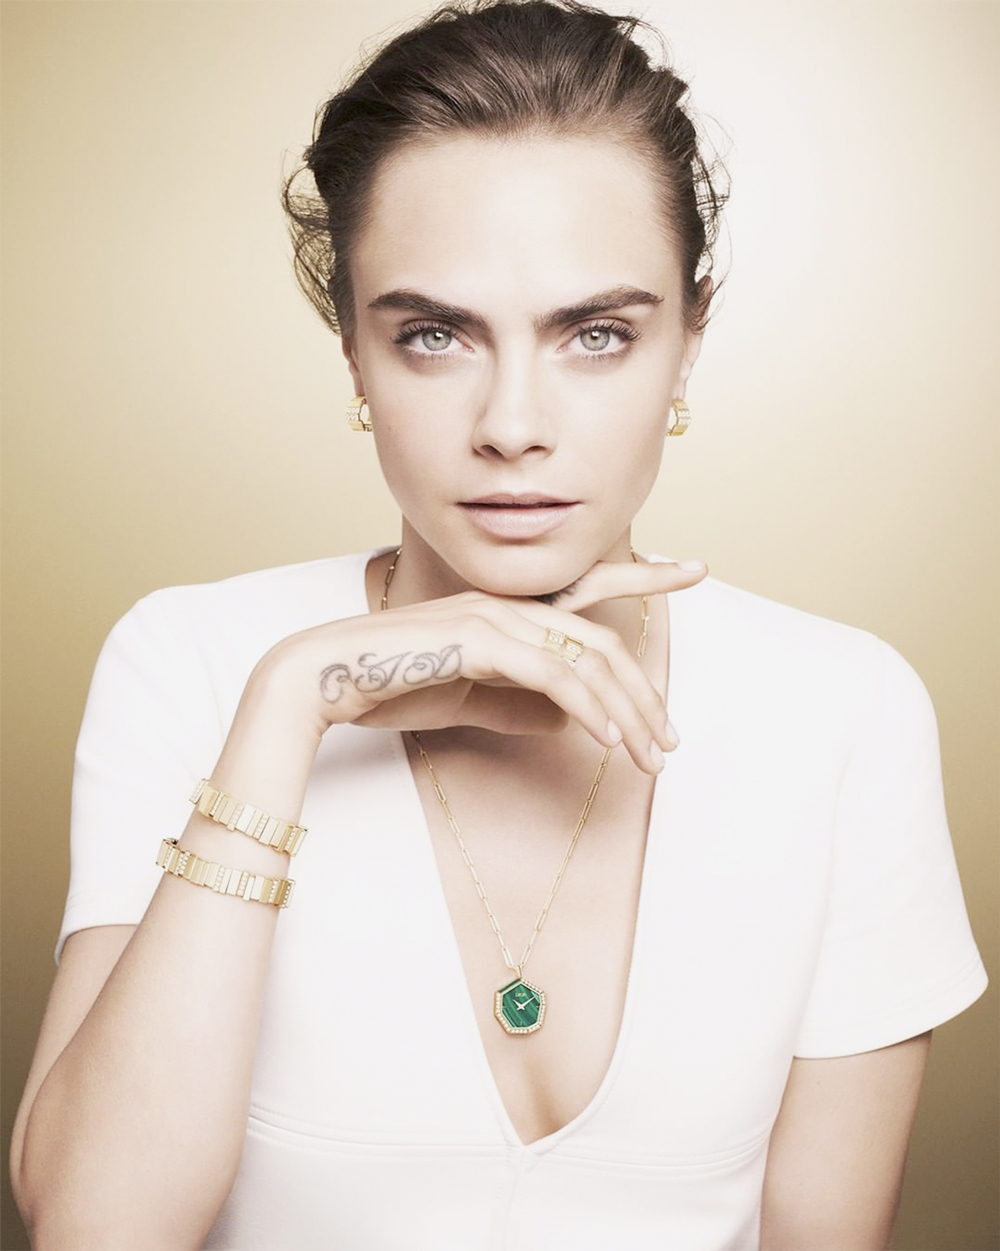 HIGHLIGHT - Dior necklace adorns the neck of model Cara Delevingne: shine -